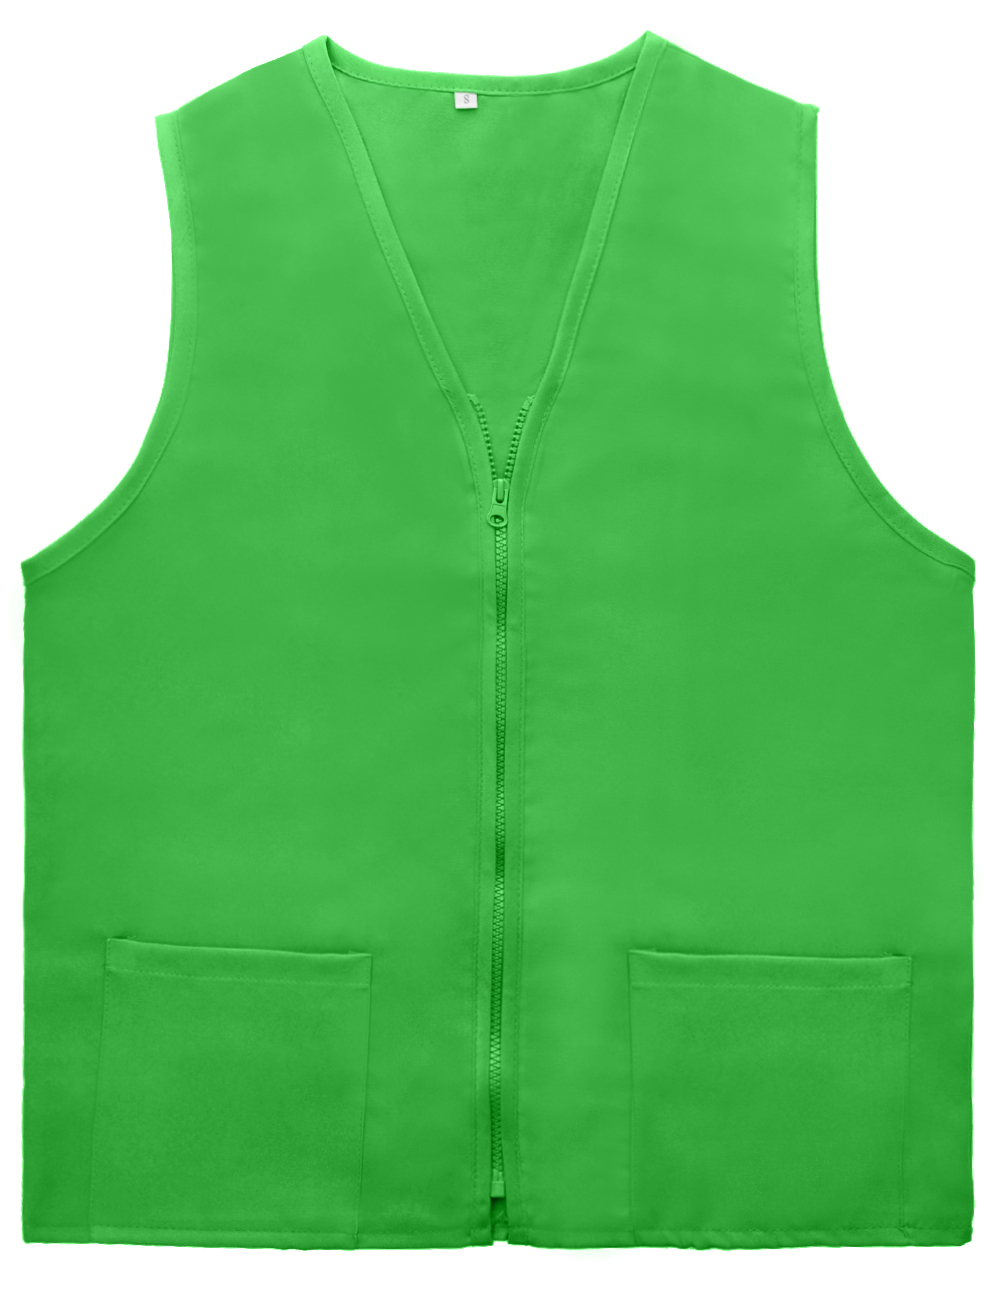 5x Lot TOPTIE Zipper Uniform Vest with 2 Pockets for Supermarket Clerk